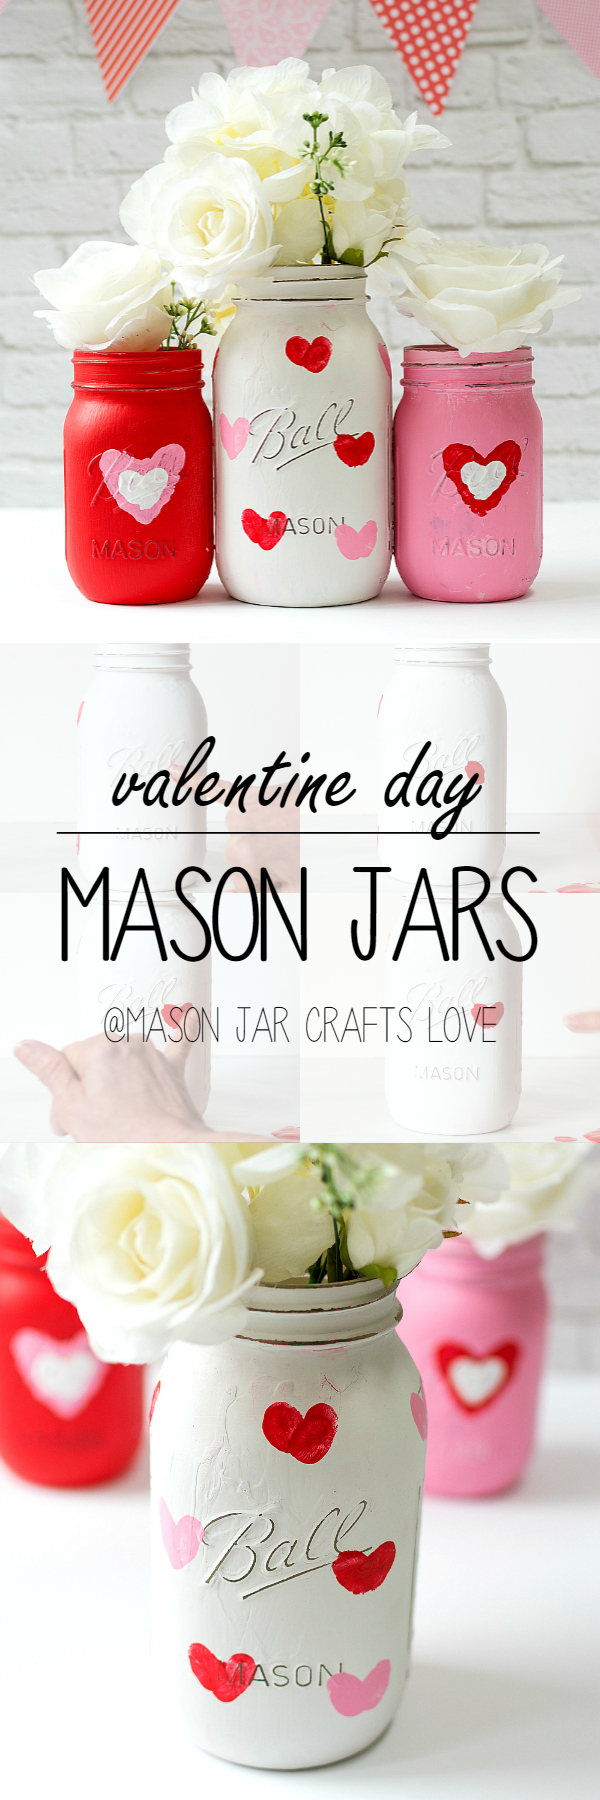 Jar Crafts for Valentine's Day - Thumbprint Heart Mason Jar Vase Craft for Kids